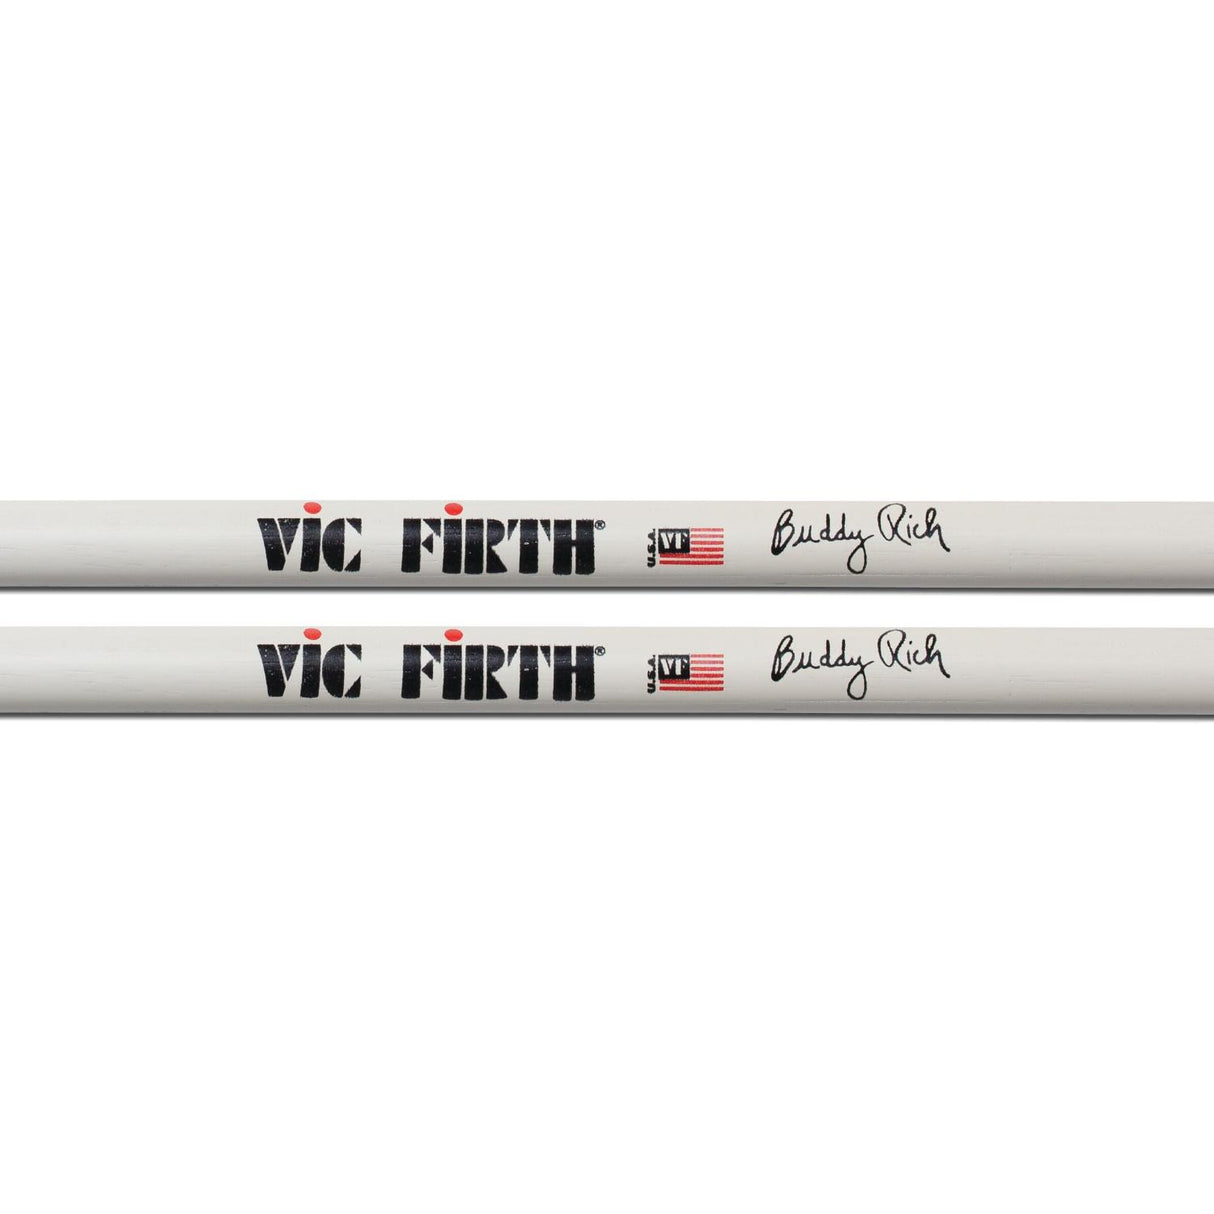 Vic Firth Signature Drum Stick Buddy Rich Nylon Tip - Drum Center Of Portsmouth